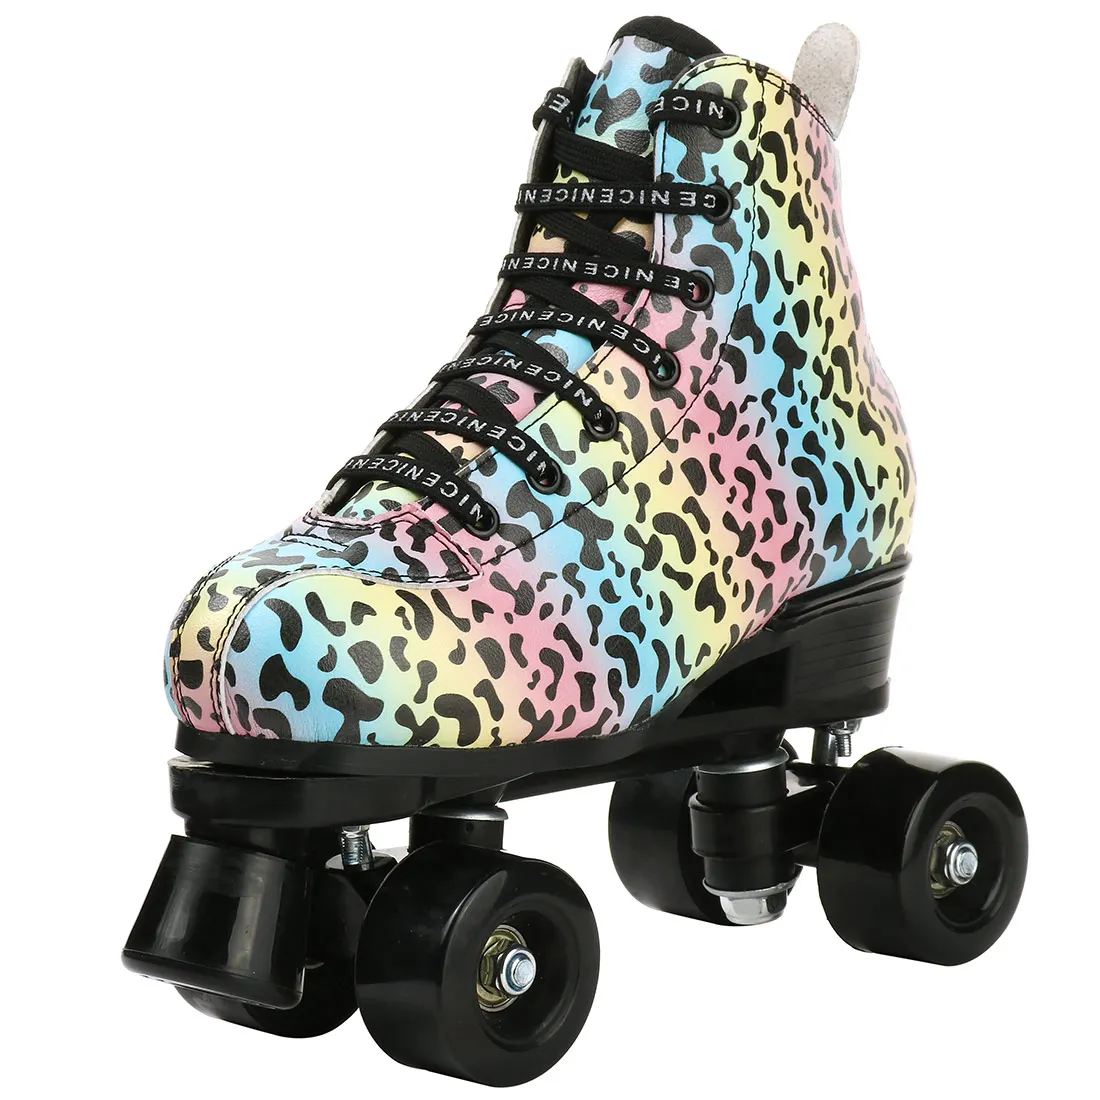 YYW Roller Skates for Women and Men Funky Leopard-Print Outdoor Skates PU Leather Roller Skates 